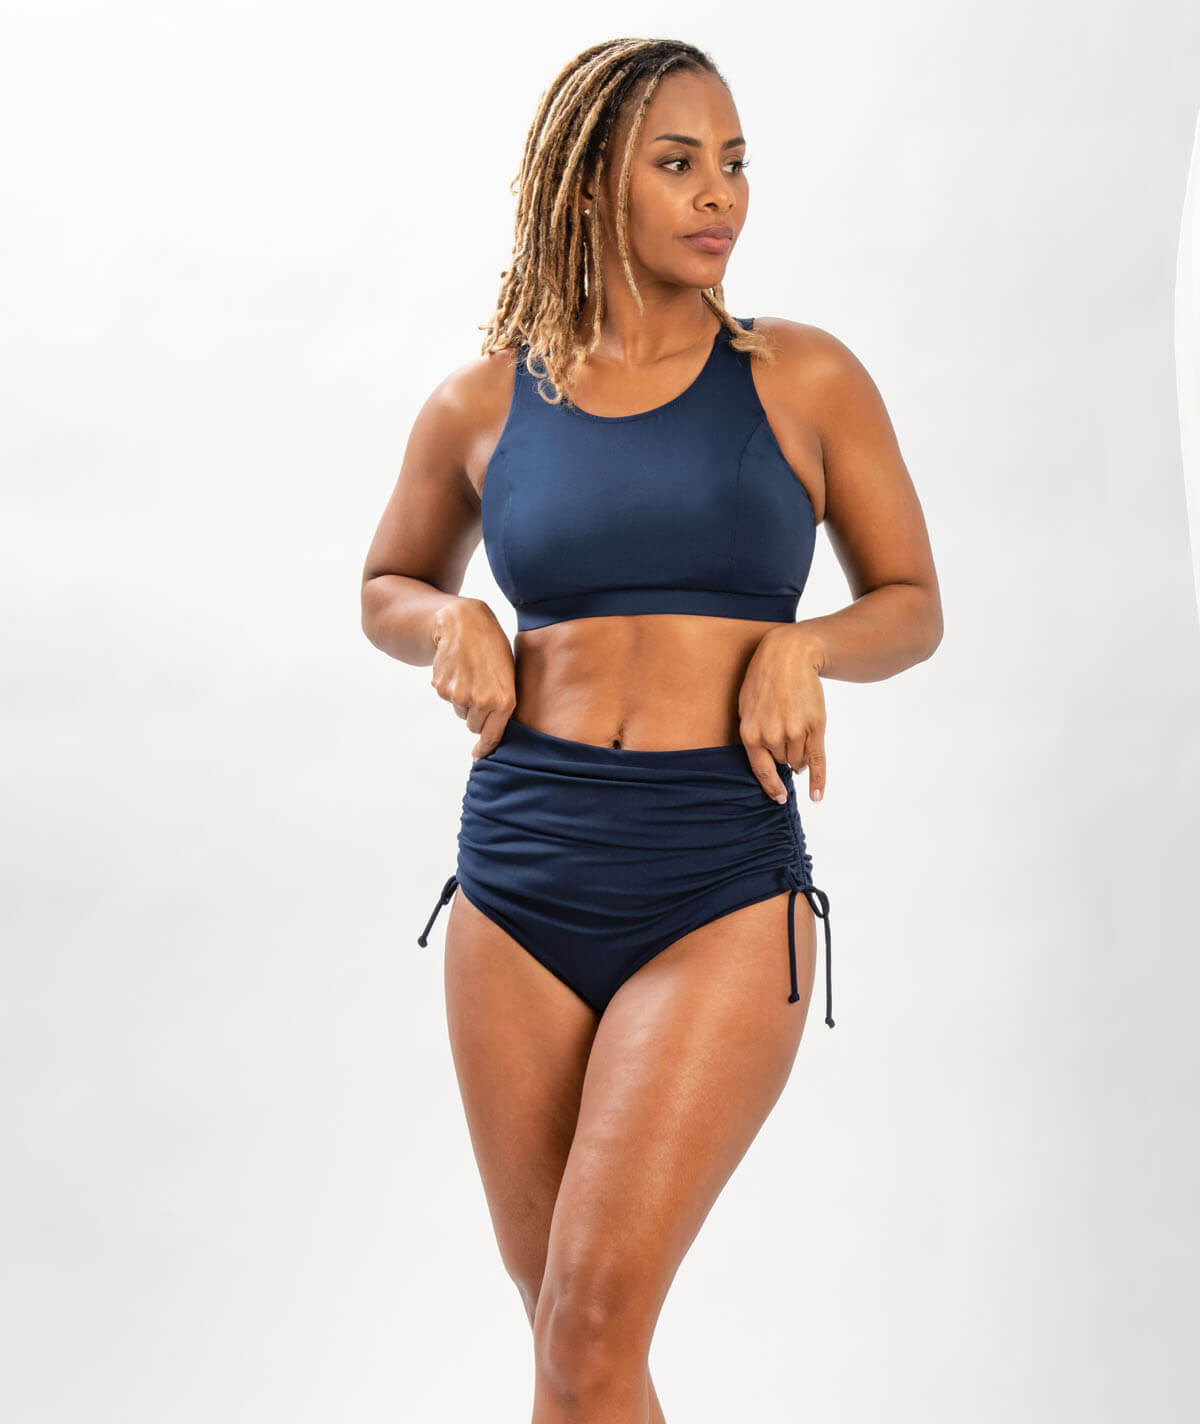 Aquashape Women's Black Clasp Back Aqua Bra Swimsuit Top - MI Sports